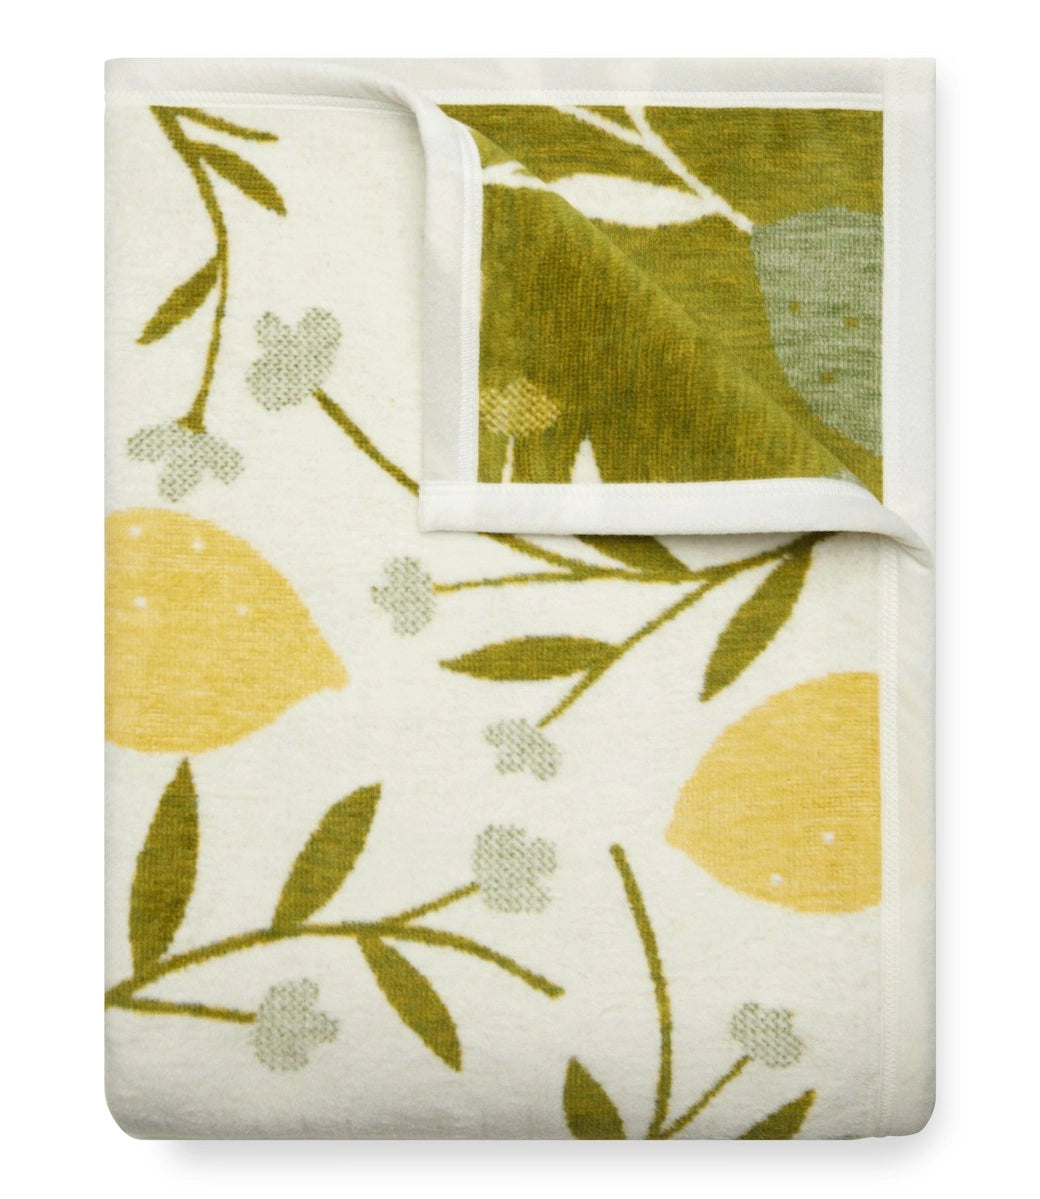 ChappyWrap Lemon Blossoms Blanket - Original Size